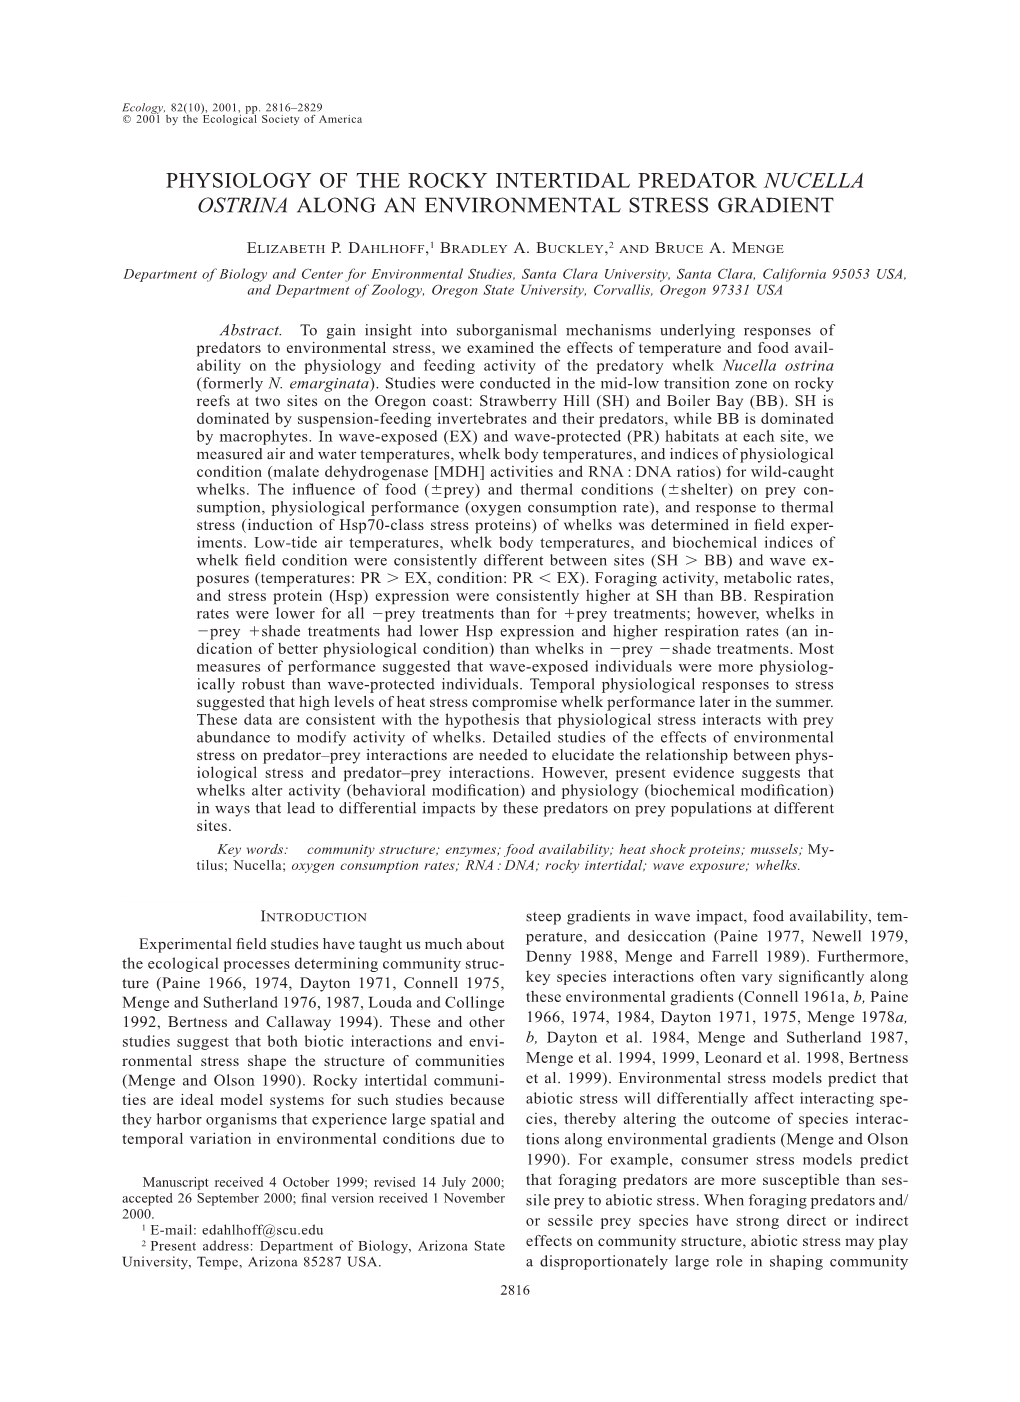 Physiology of the Rocky Intertidal Predator Nucella Ostrina Along an Environmental Stress Gradient